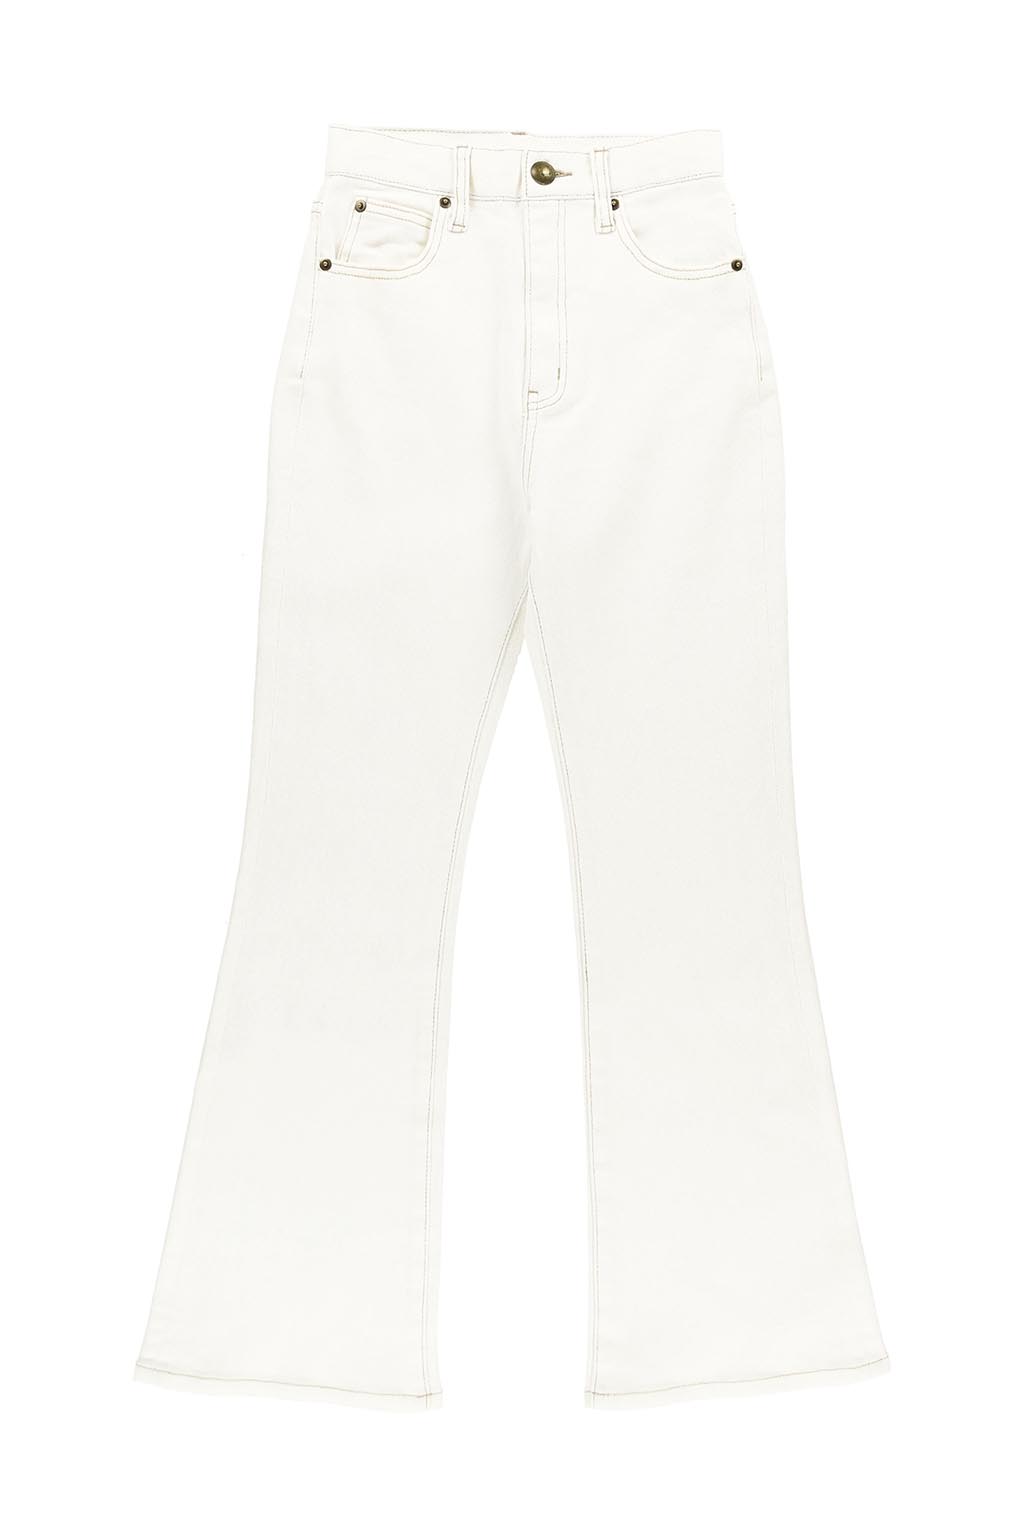 bootscut-pants-white-02